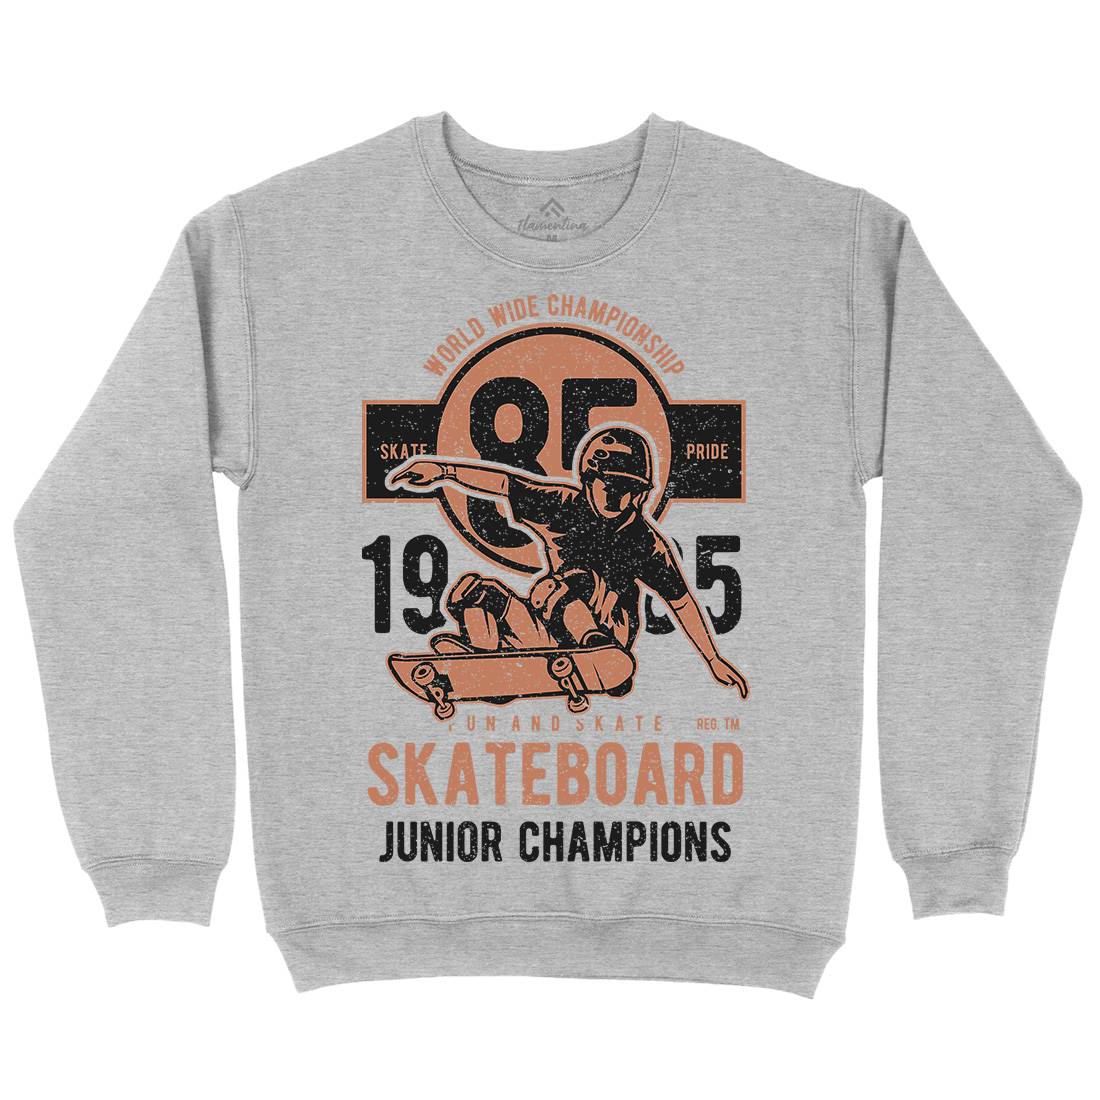 Skateboard Junior Champions Mens Crew Neck Sweatshirt Skate A755